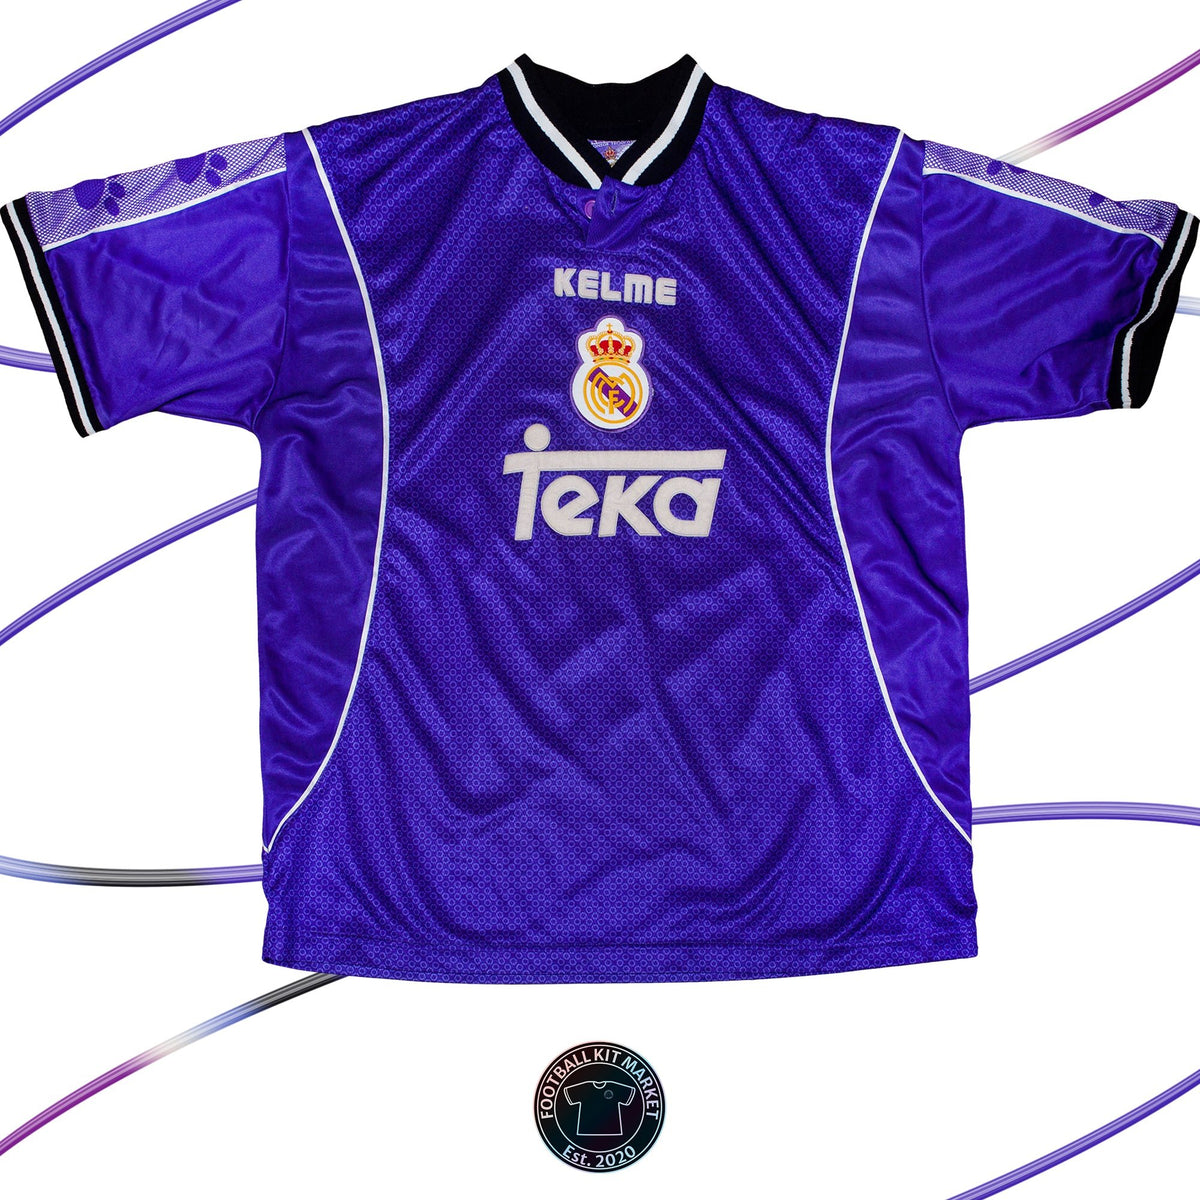 Genuine REAL MADRID Away (1996-1997) - KELME (XL) - Product Image from Football Kit Market